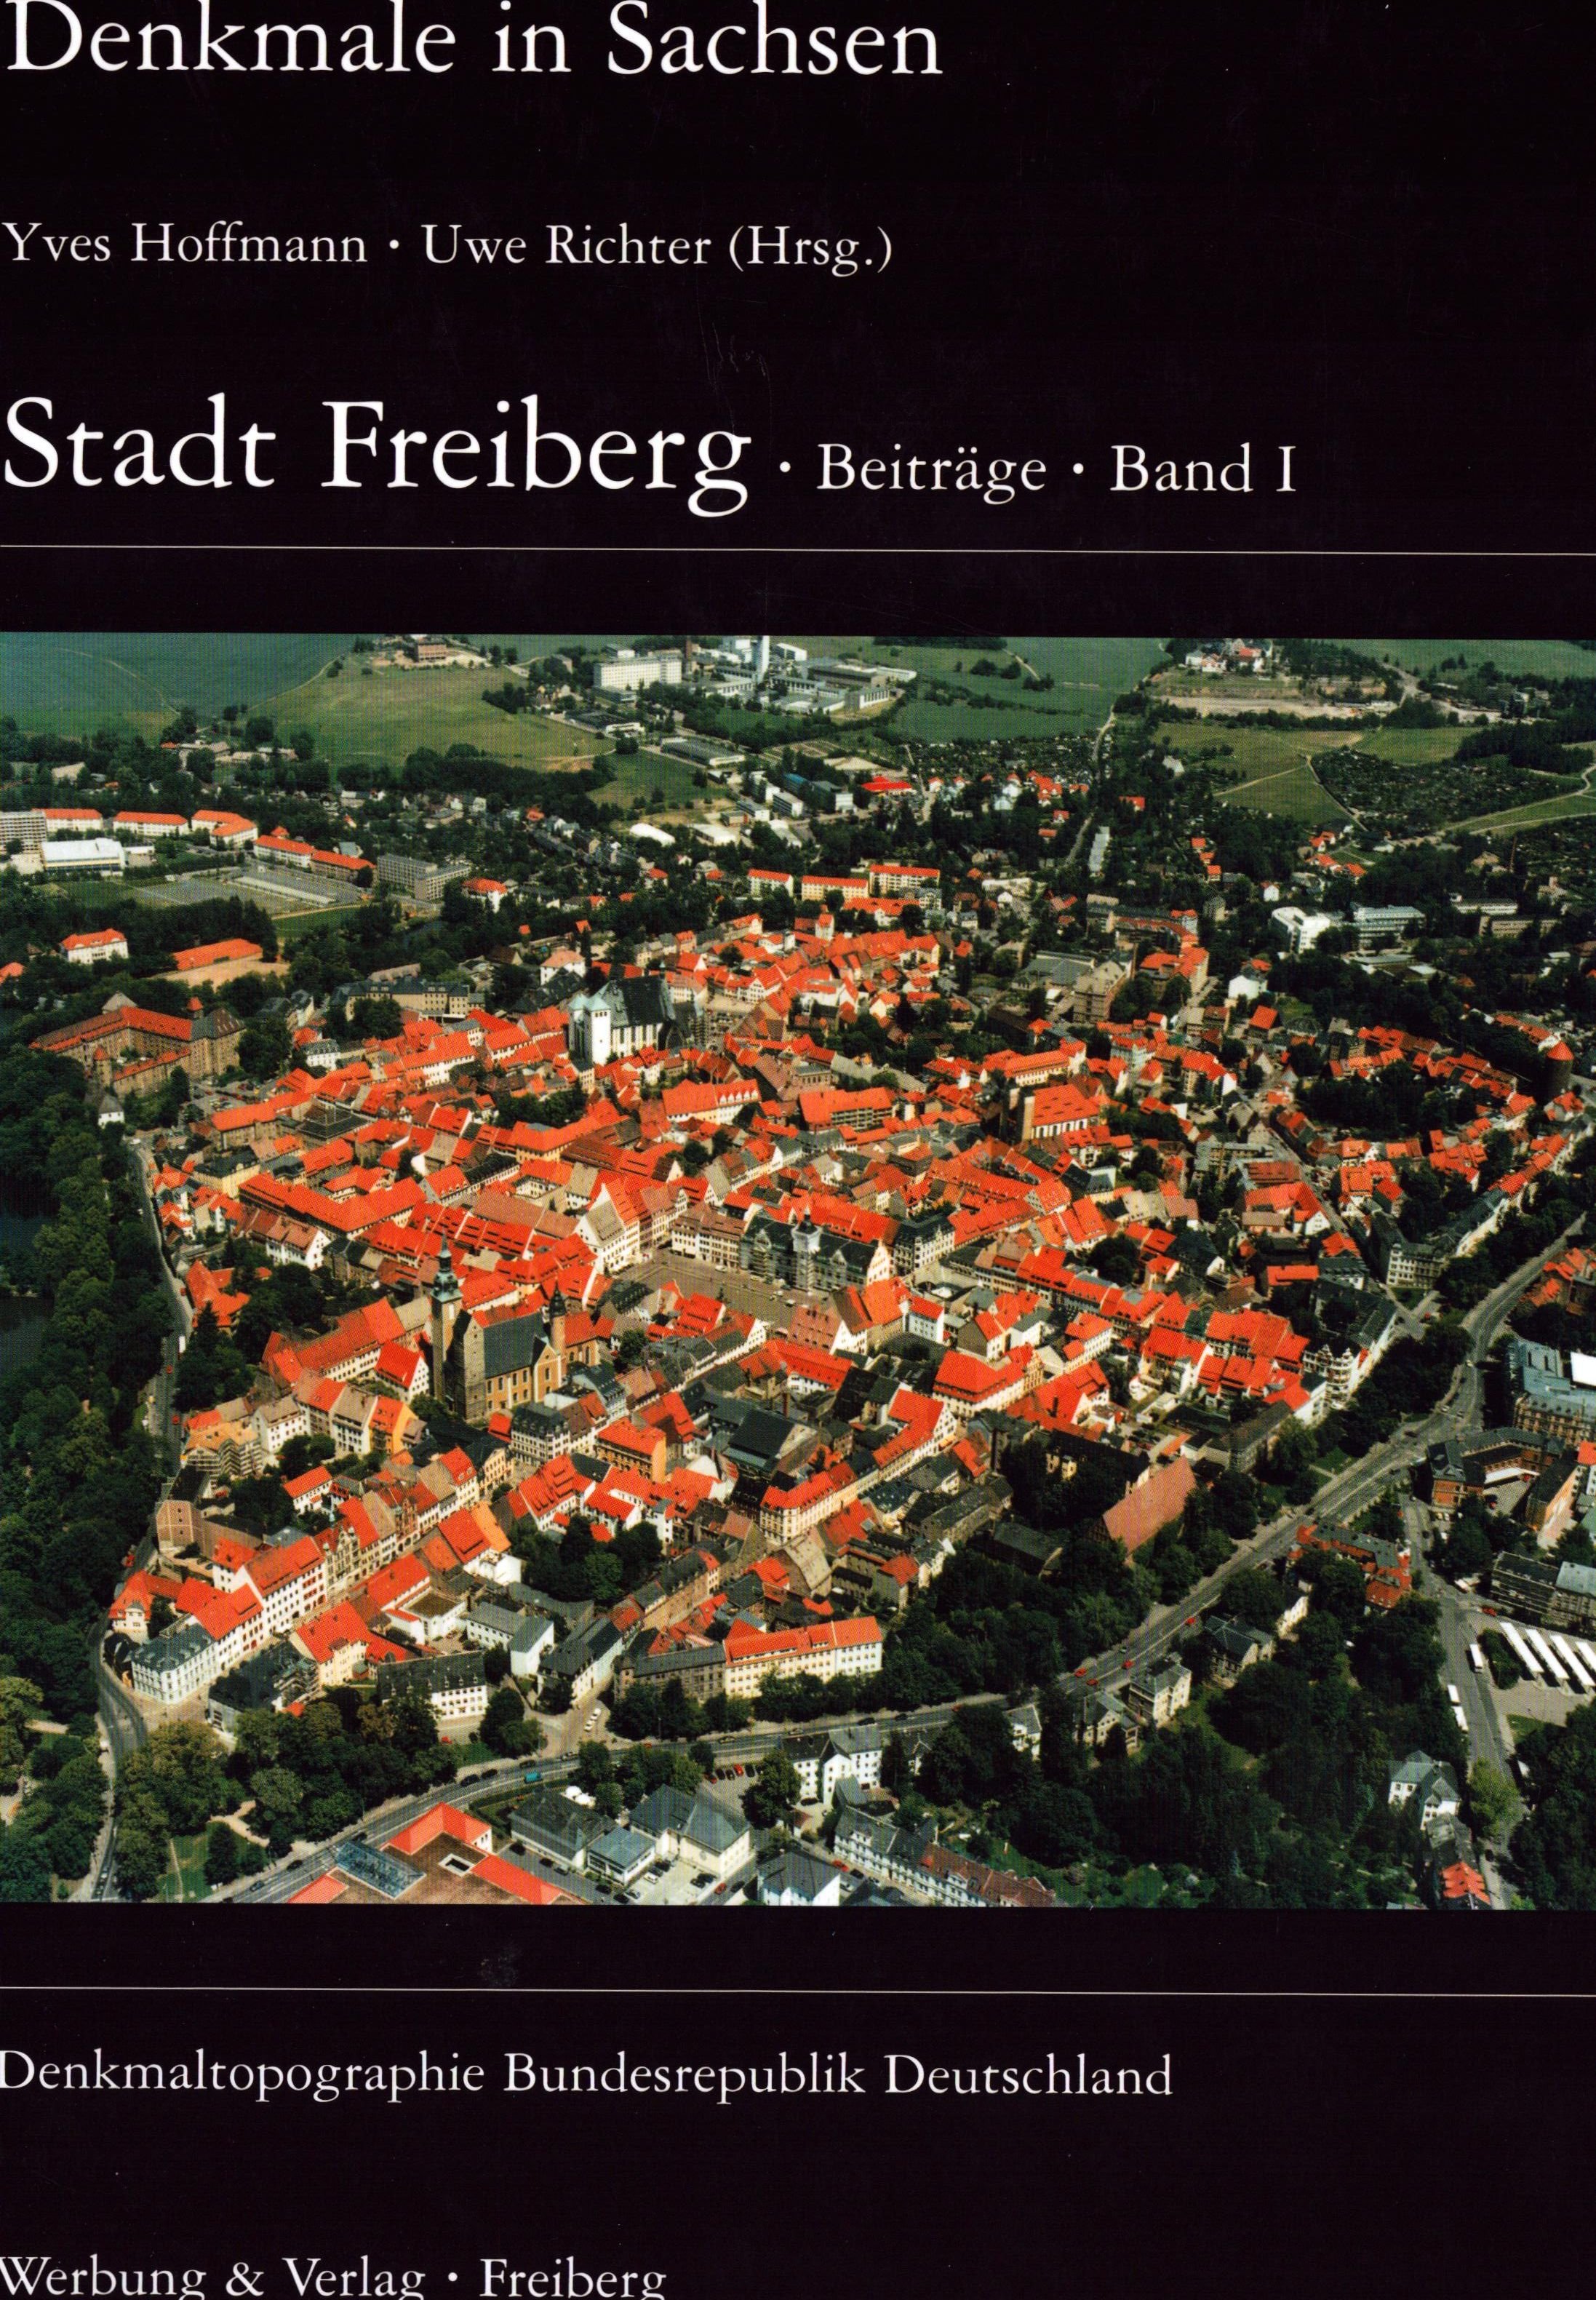 Denkmale in Sachsen - Stadt Freiberg (Archiv SAXONIA-FREIBERG-STIFTUNG CC BY-NC-SA)